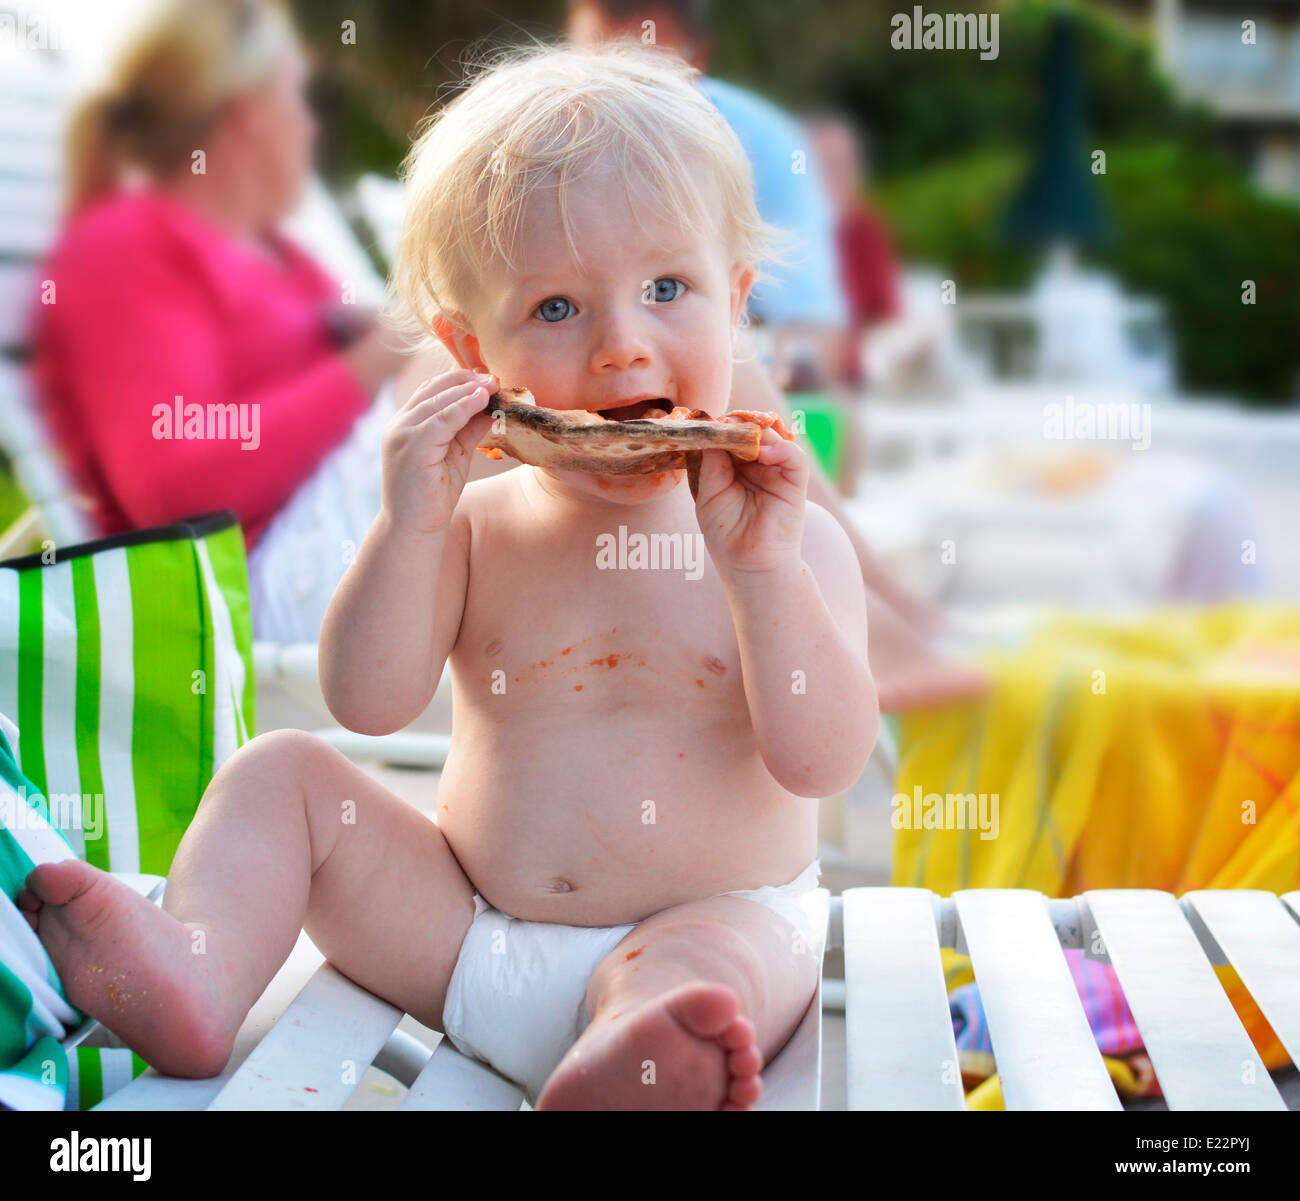 Baby boy eating pizza Stock Photo